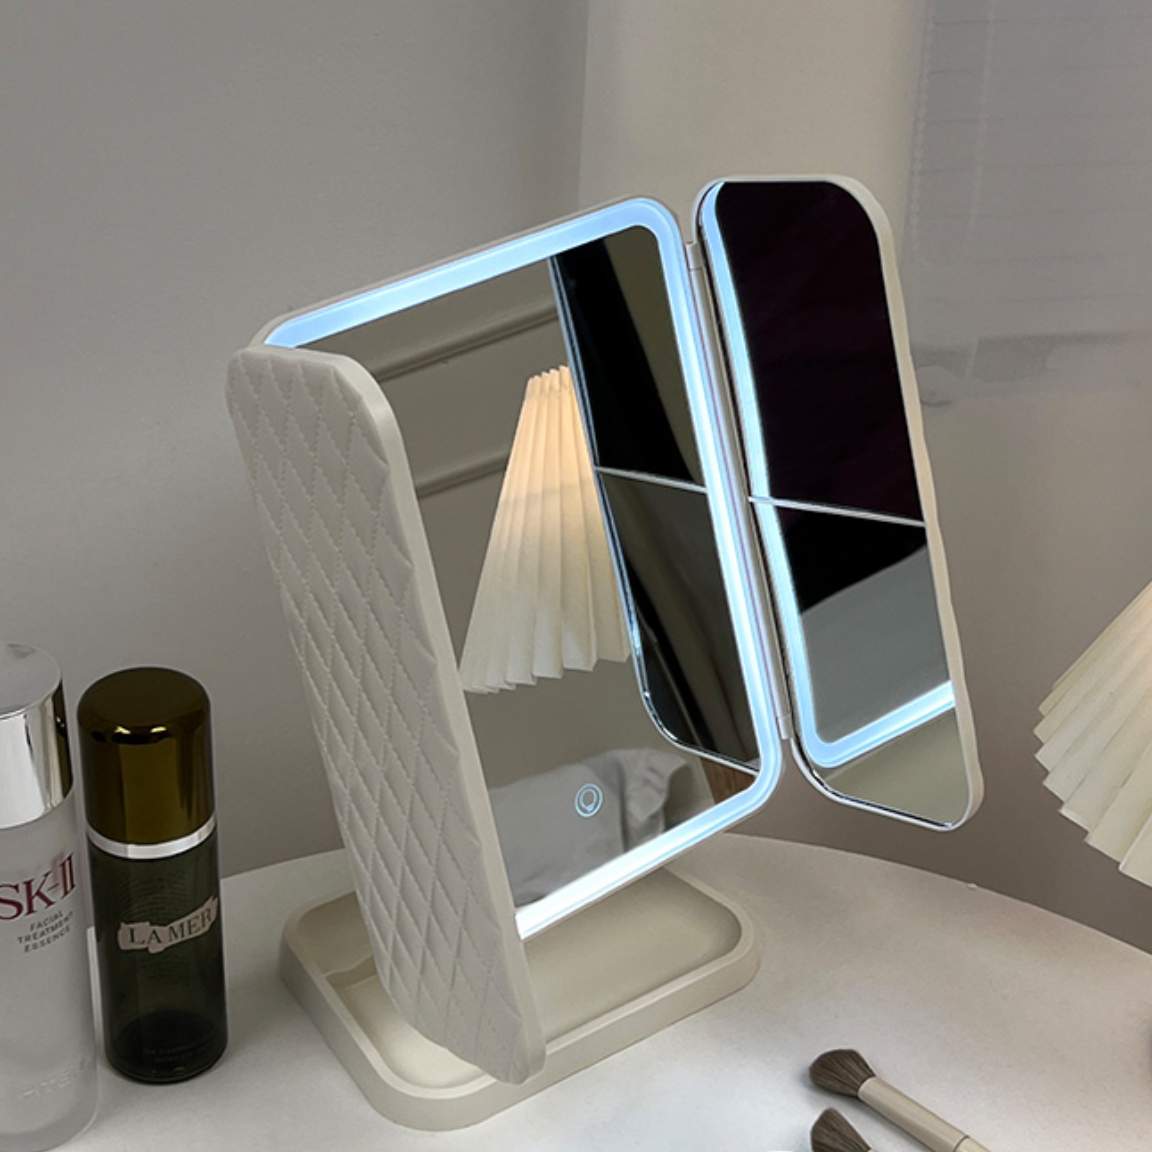  ledライト付き 三面鏡｜化粧鏡 タッチパネル 折りたたみ式 180°回転 角度自由調整 |undefined